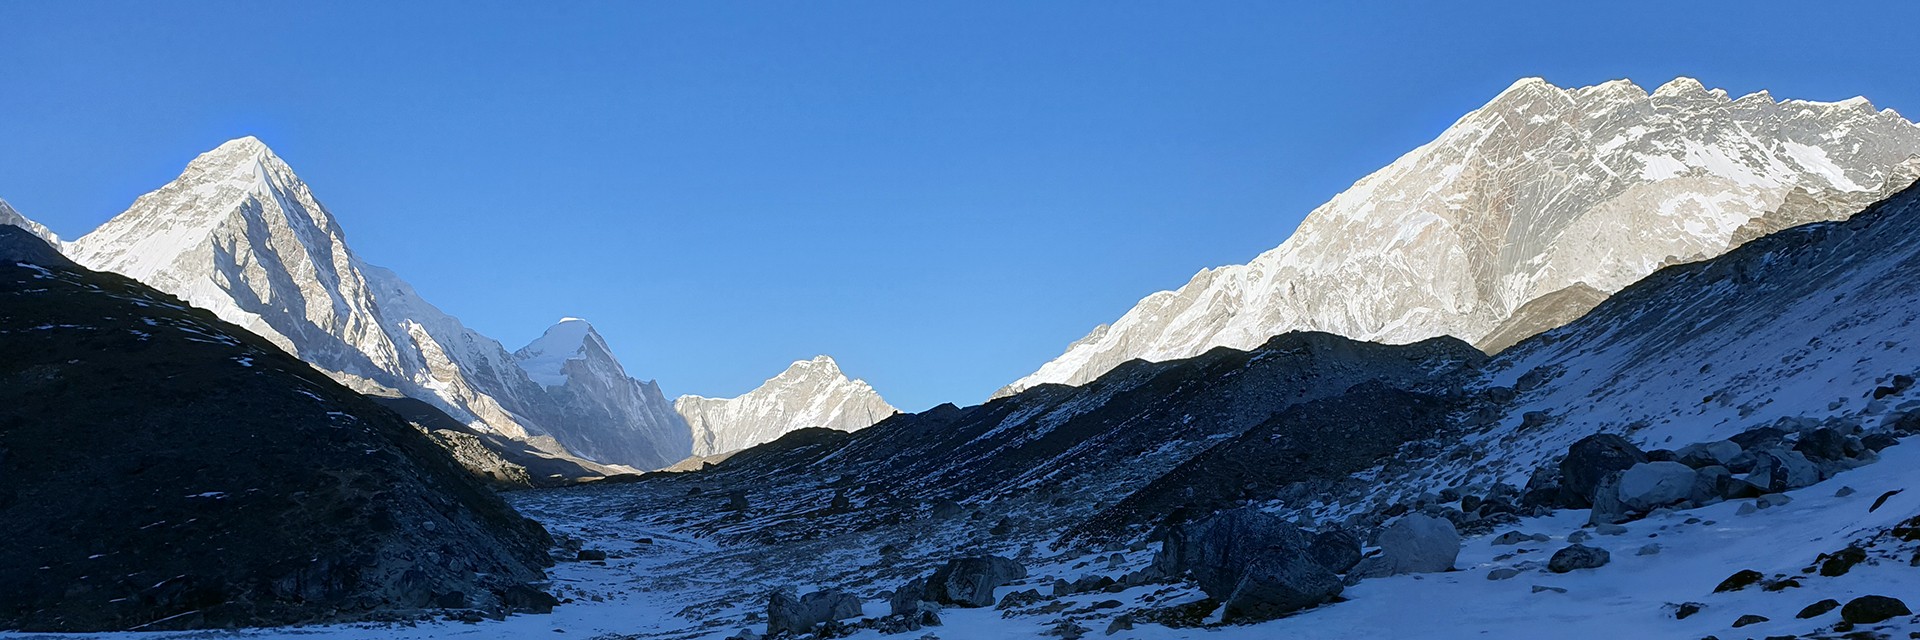 Everest Base Camp Trek with Heli Flight